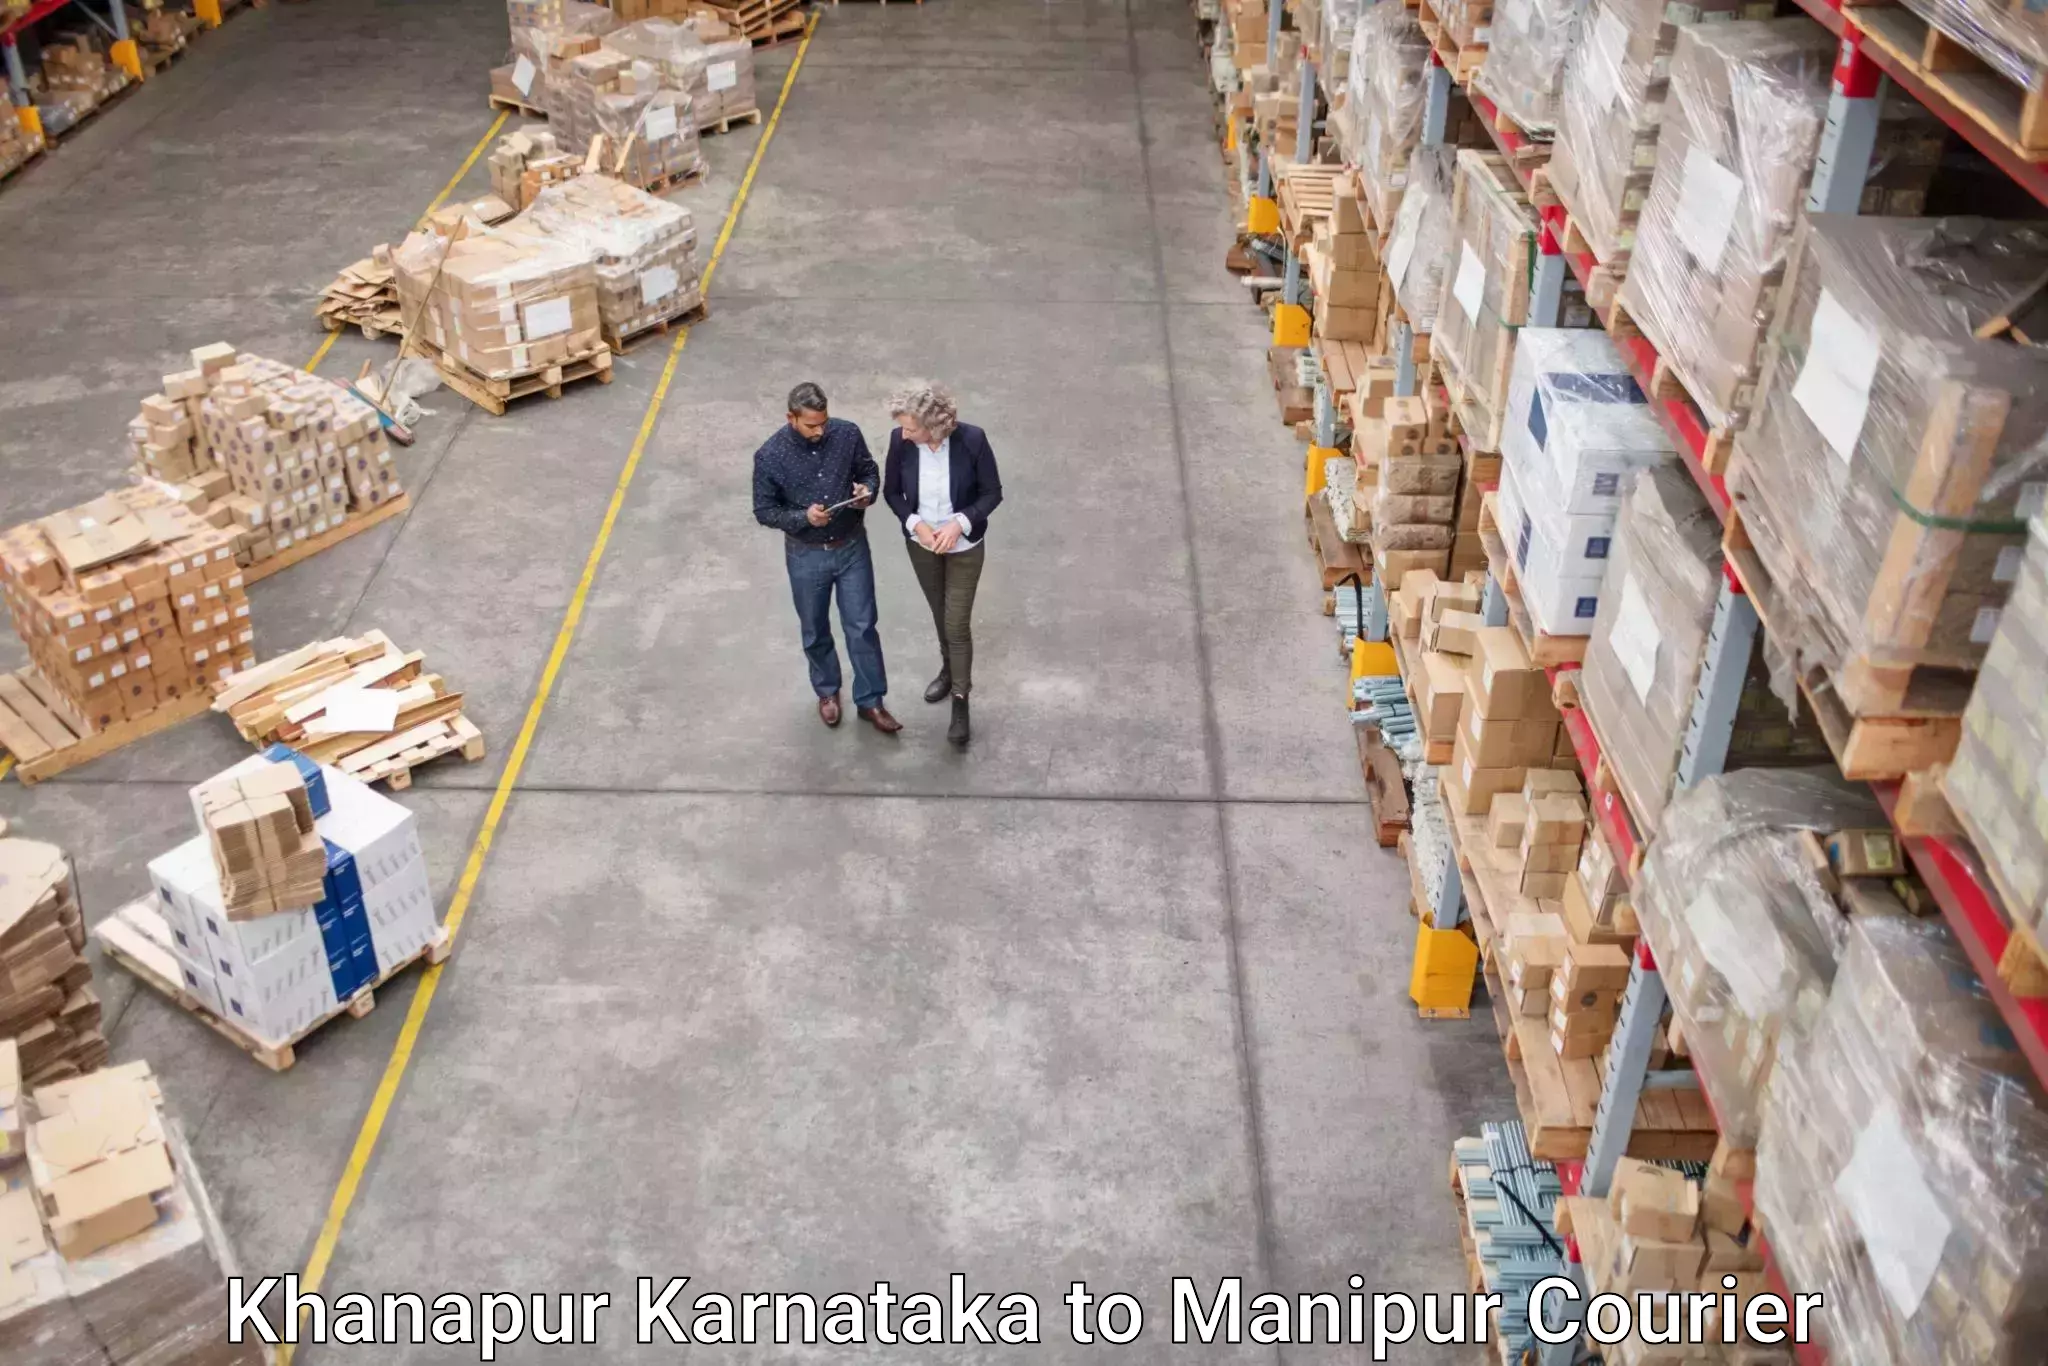 Secure package delivery Khanapur Karnataka to Manipur